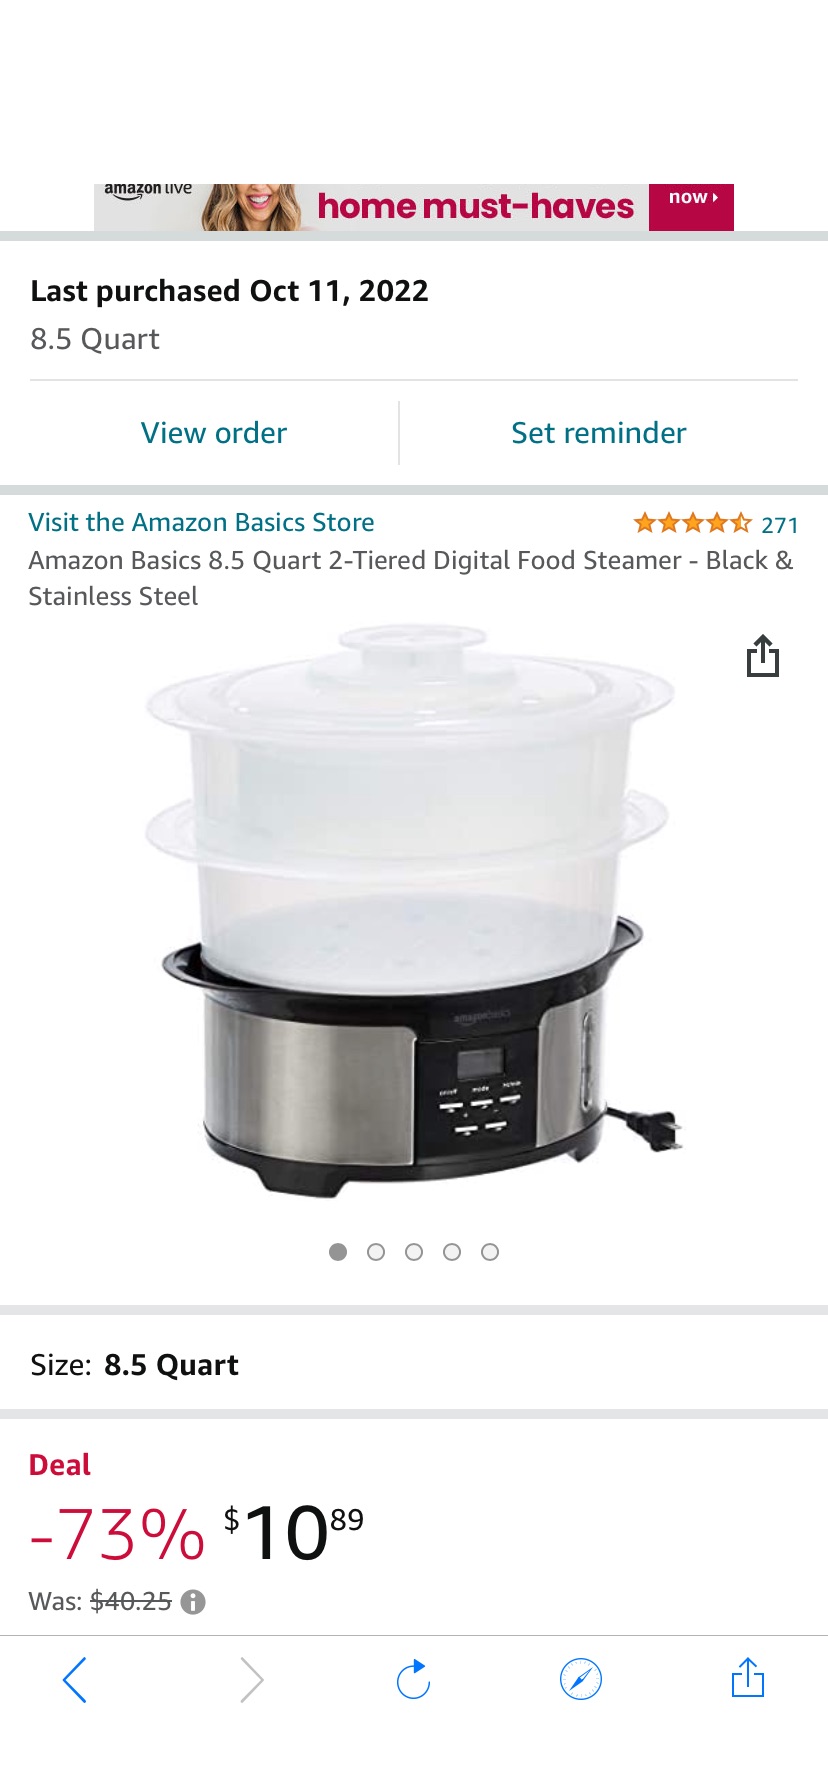 Amazon.com: Amazon Basics 8.5 Quart 2-Tiered Digital Food Steamer - Black & Stainless Steel: Home & Kitchen